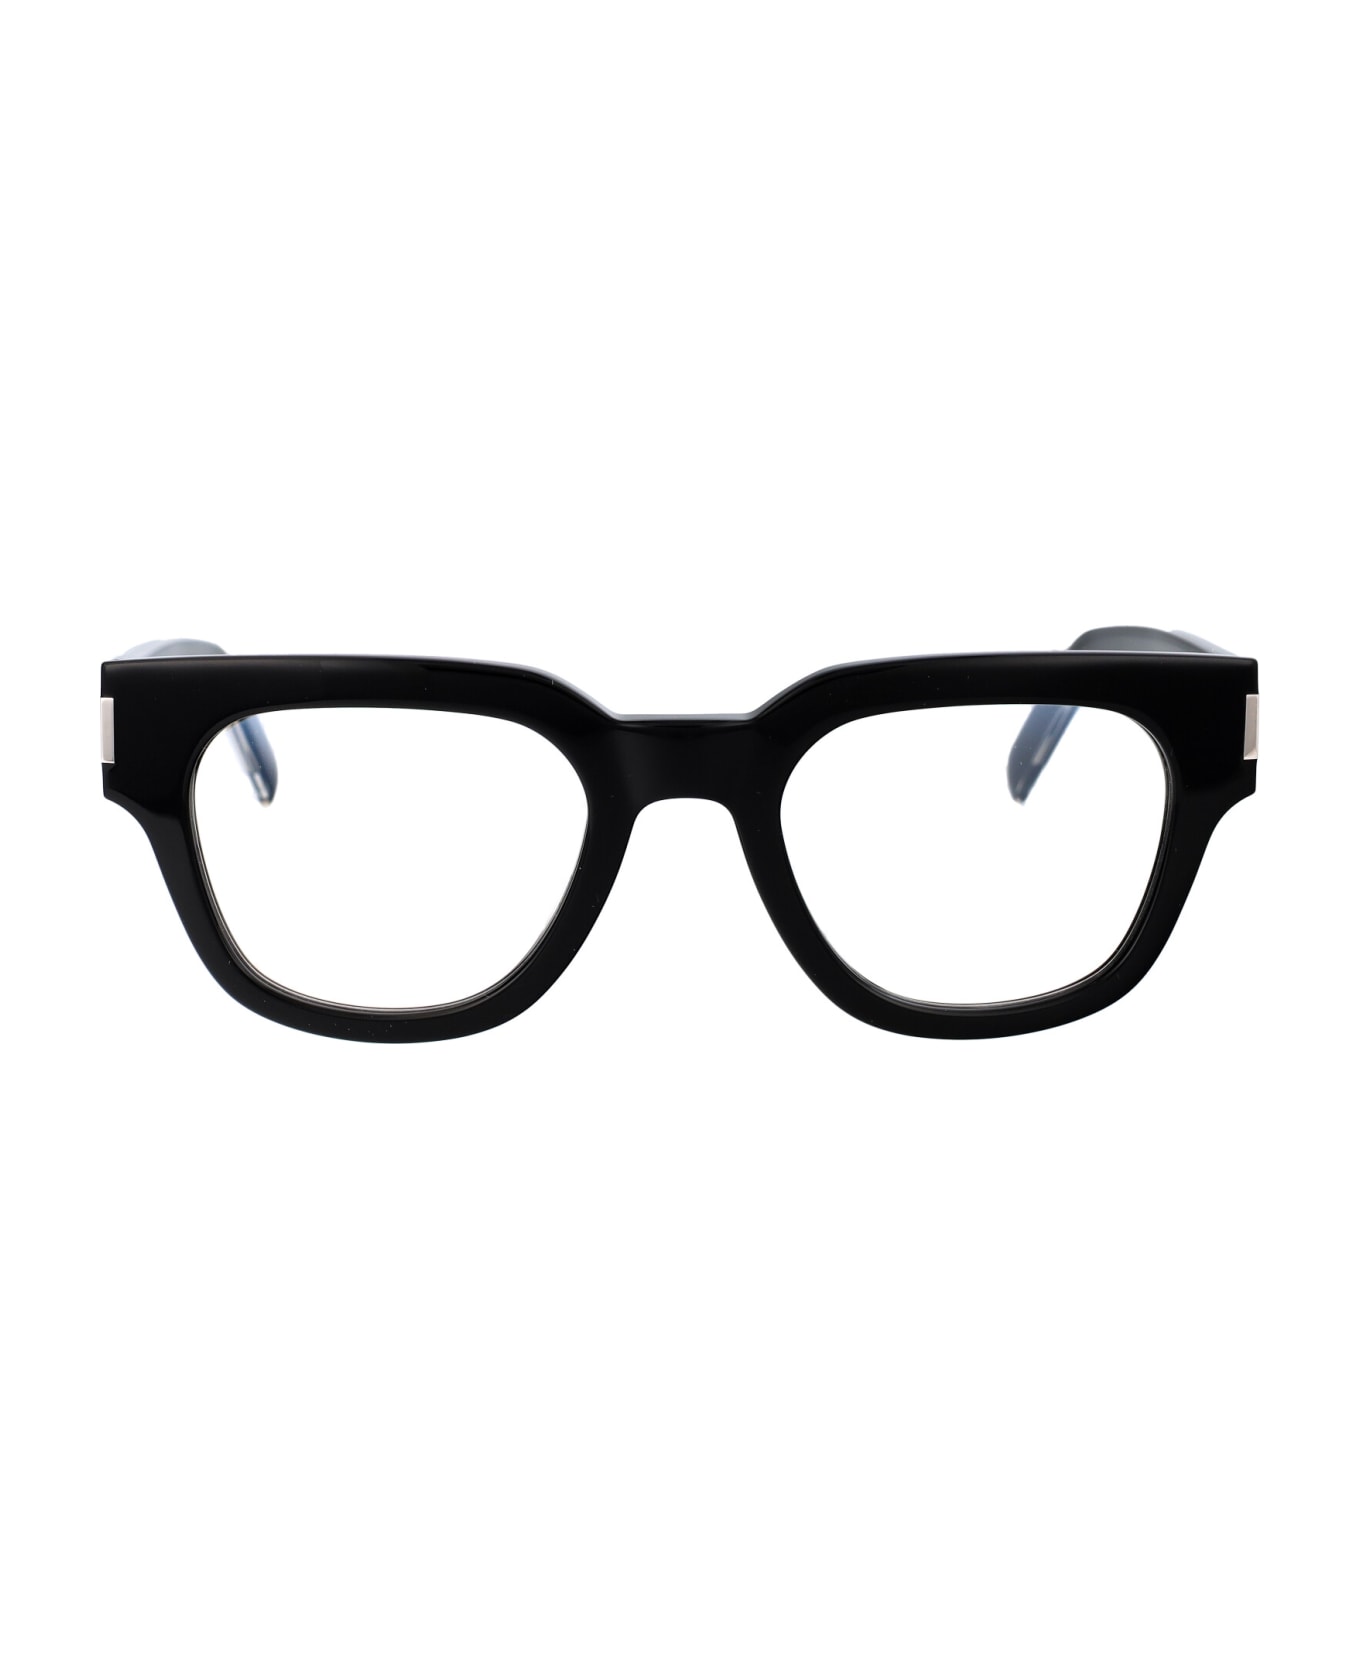 Saint Laurent Eyewear Sl 661 Glasses - 001 BLACK CRYSTAL TRANSPARENT